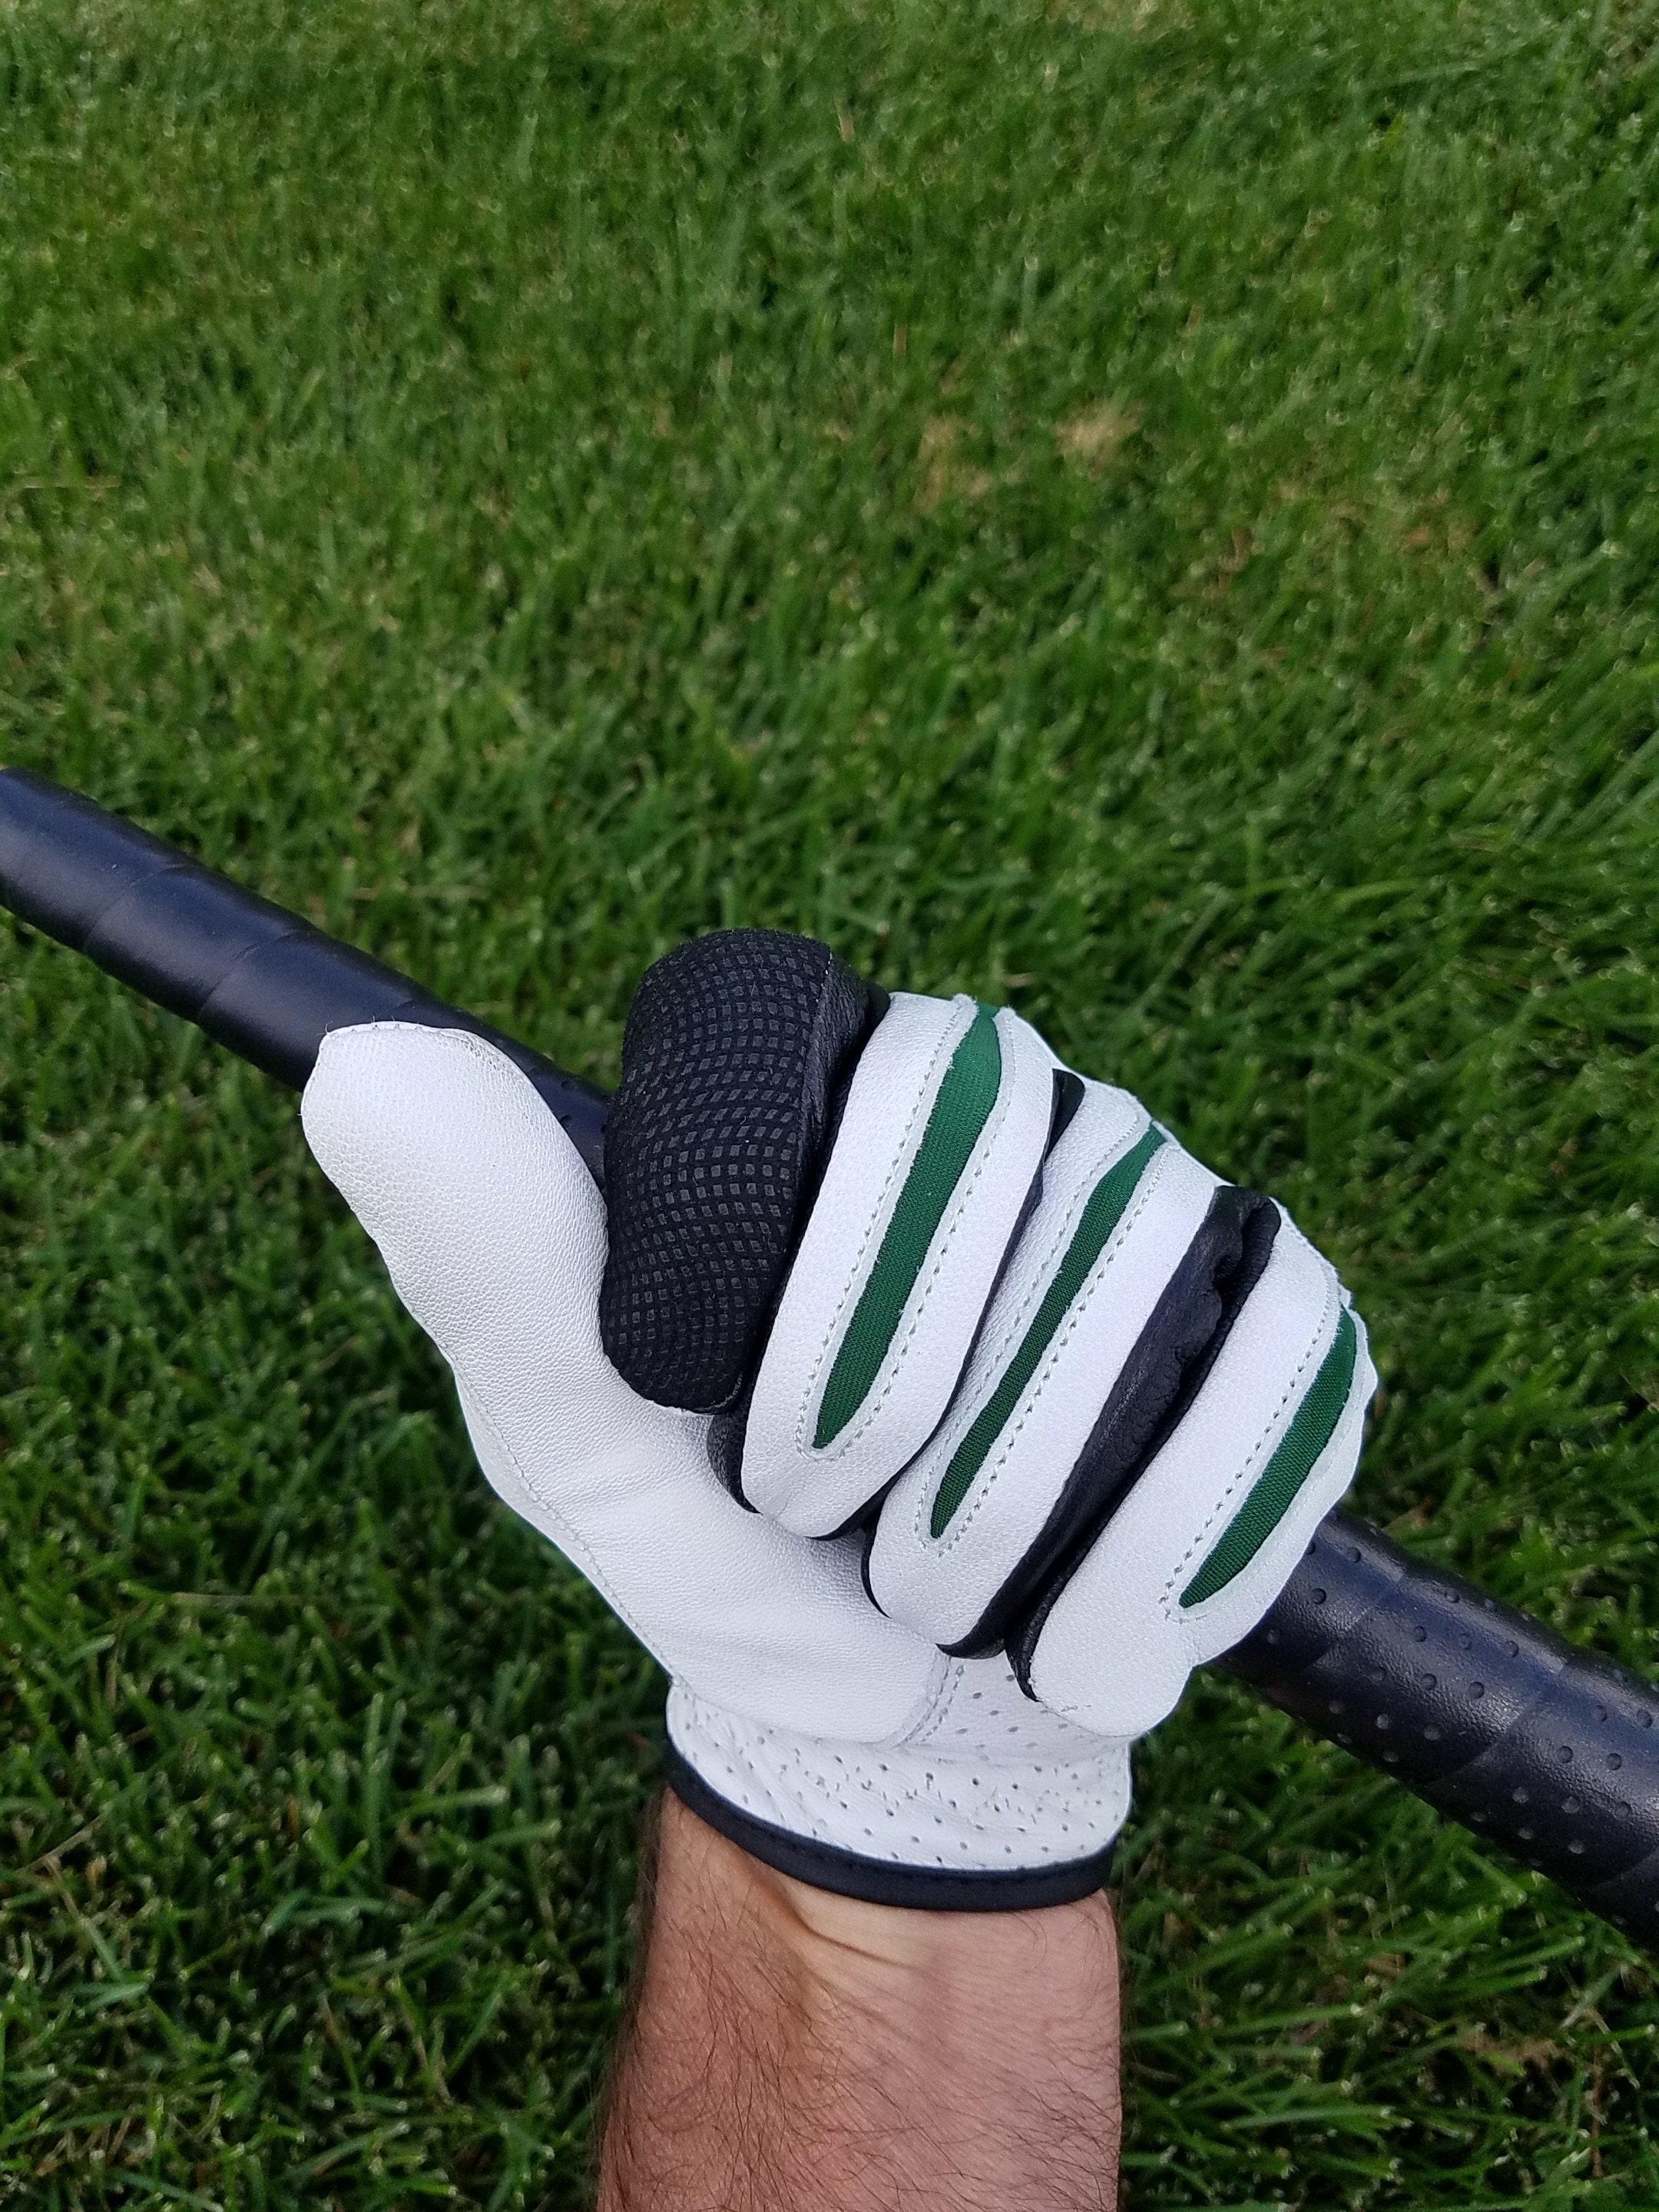 Proper Golf Grip Hand Placement Men's Glove Padlox Golf - Etsy Canada